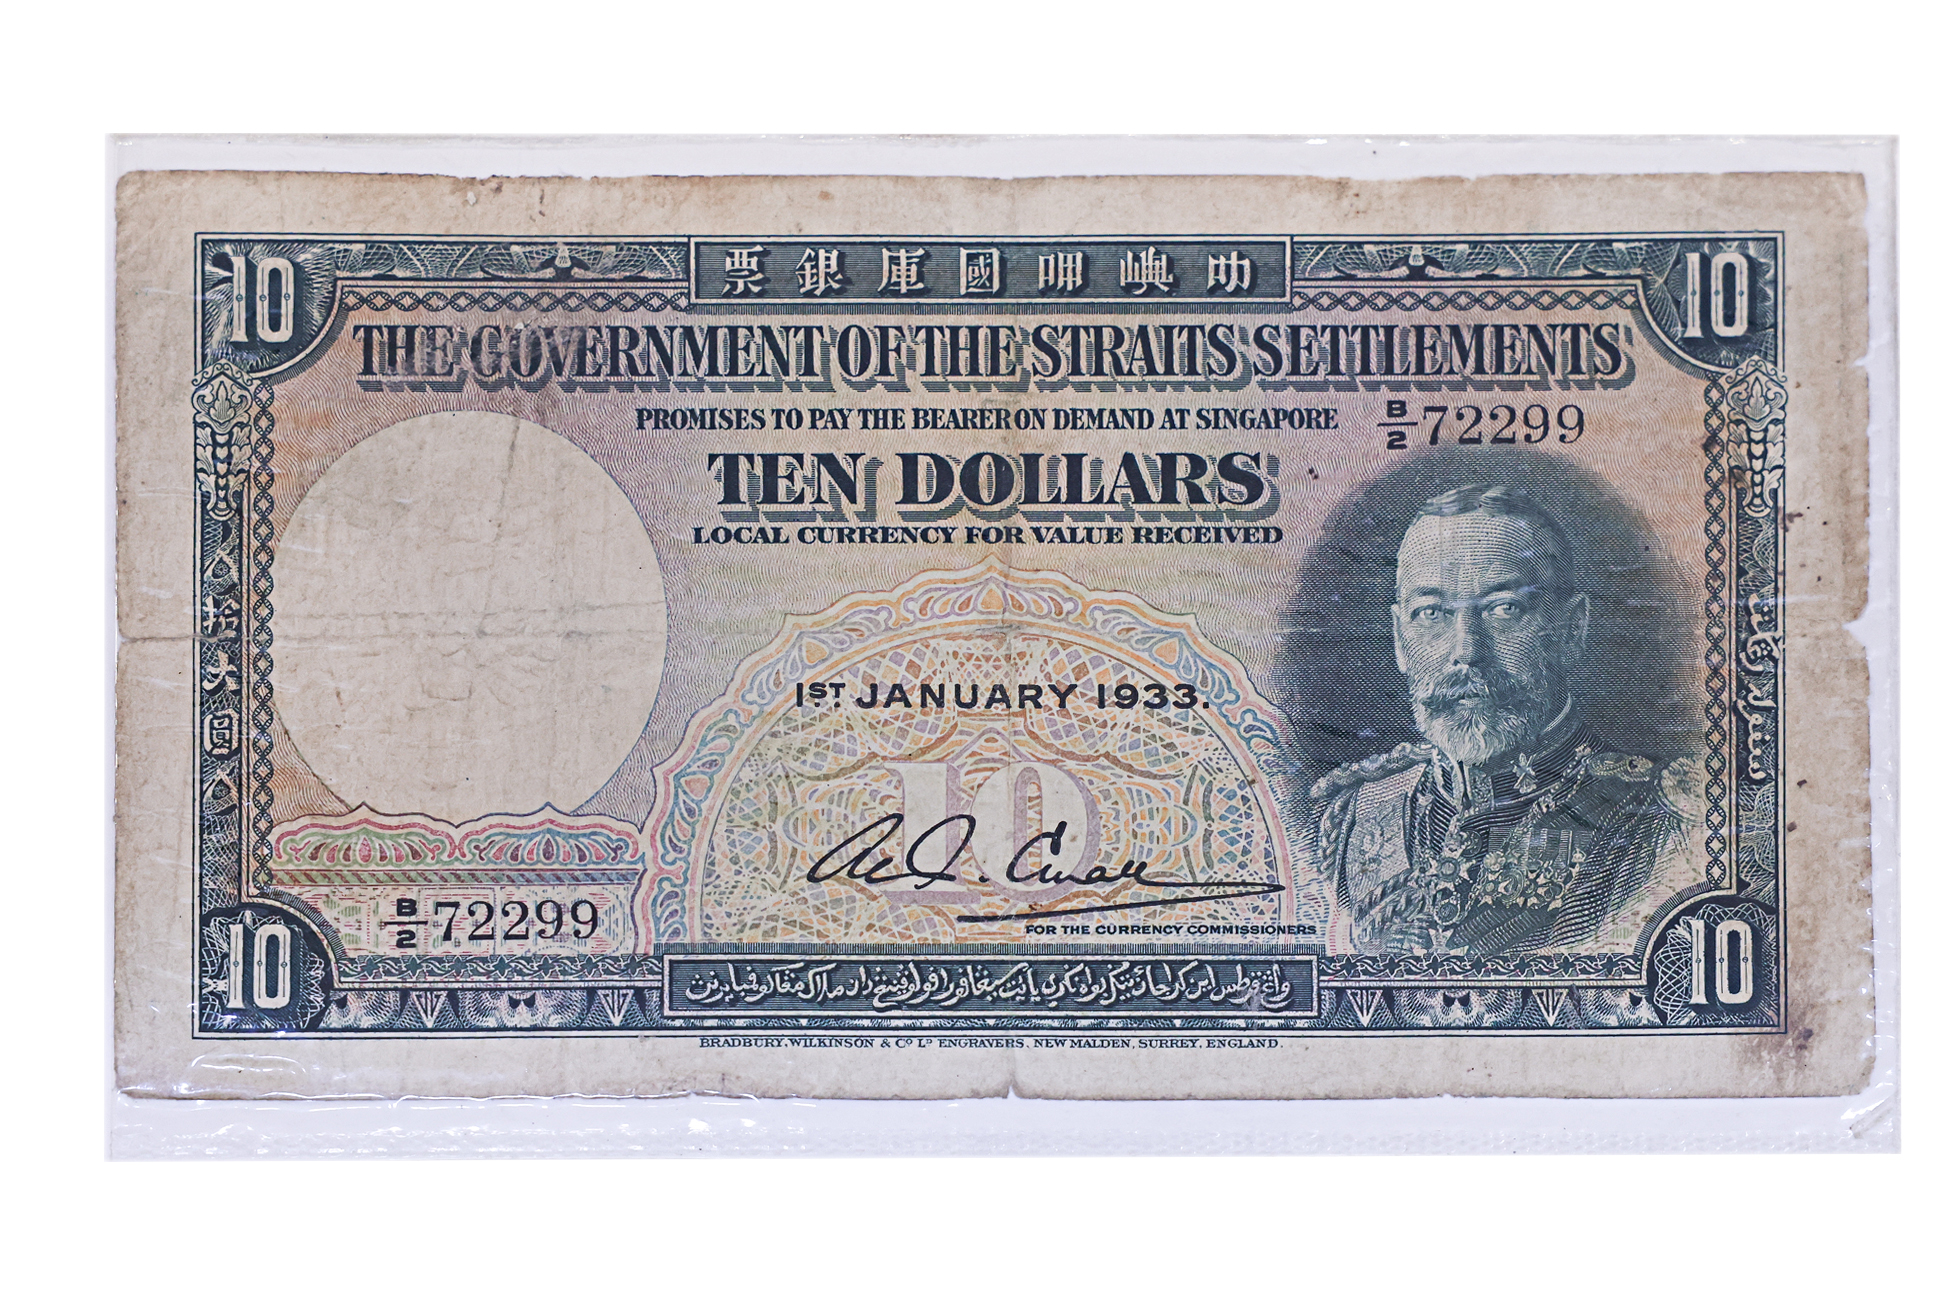 STRAITS SETTLEMENTS 10 DOLLARS 1933